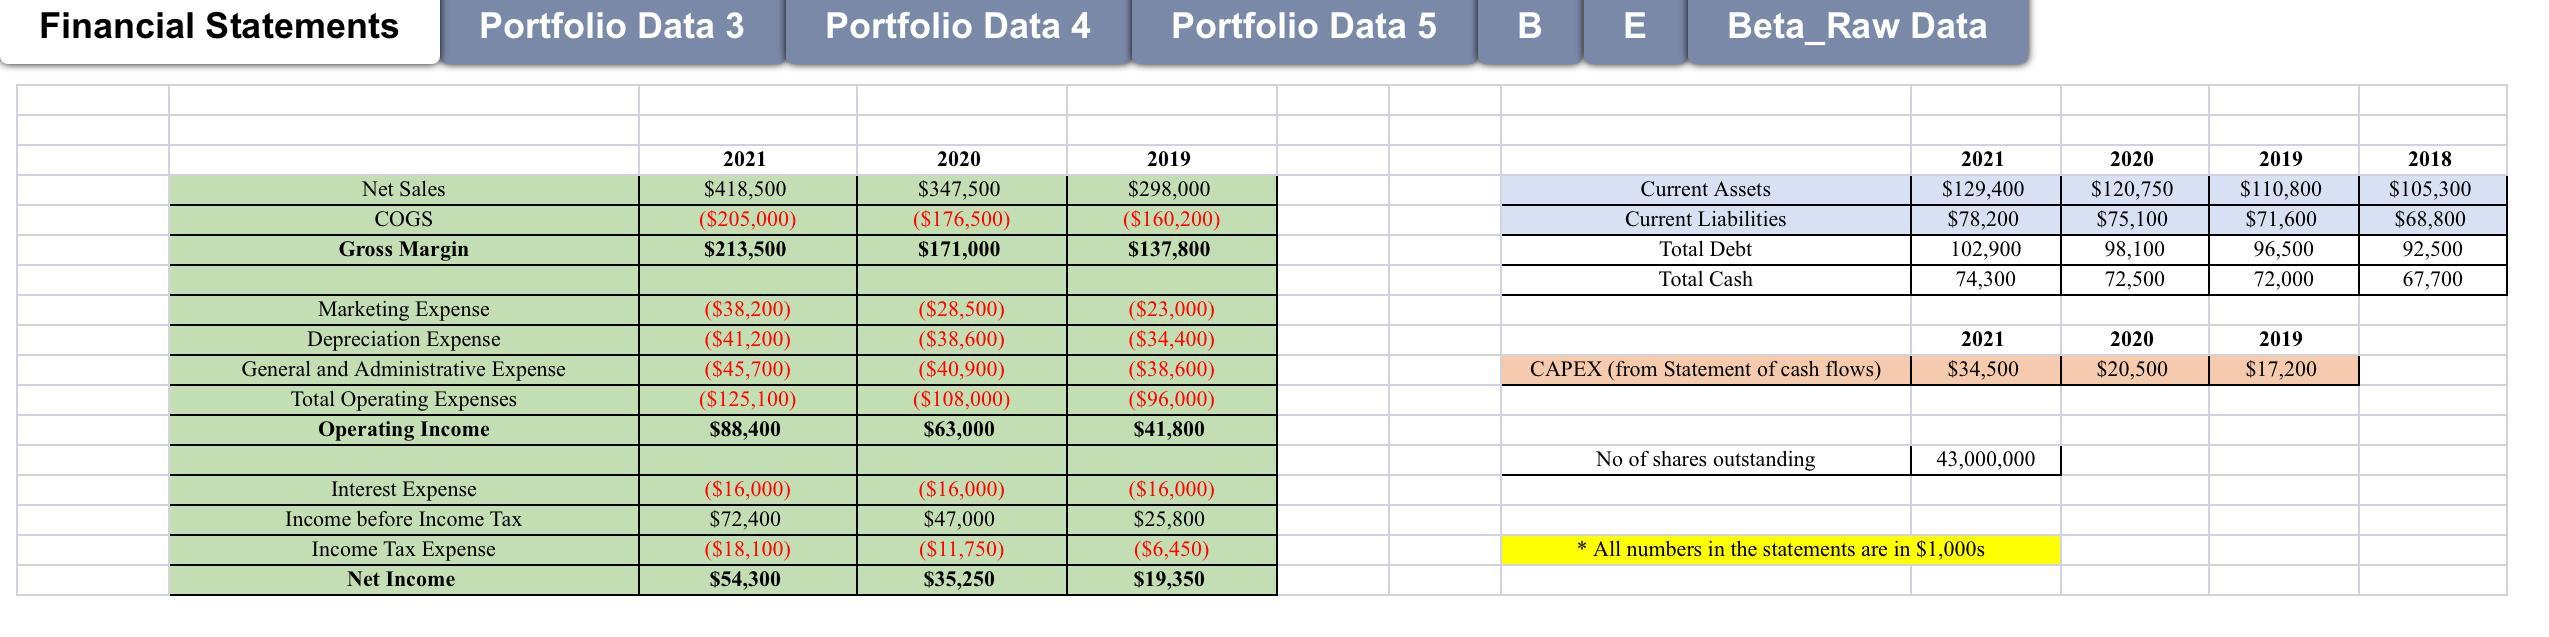 Financial Statements Portfolio Data 3 Portfolio Data 4 Portfolio Data 5